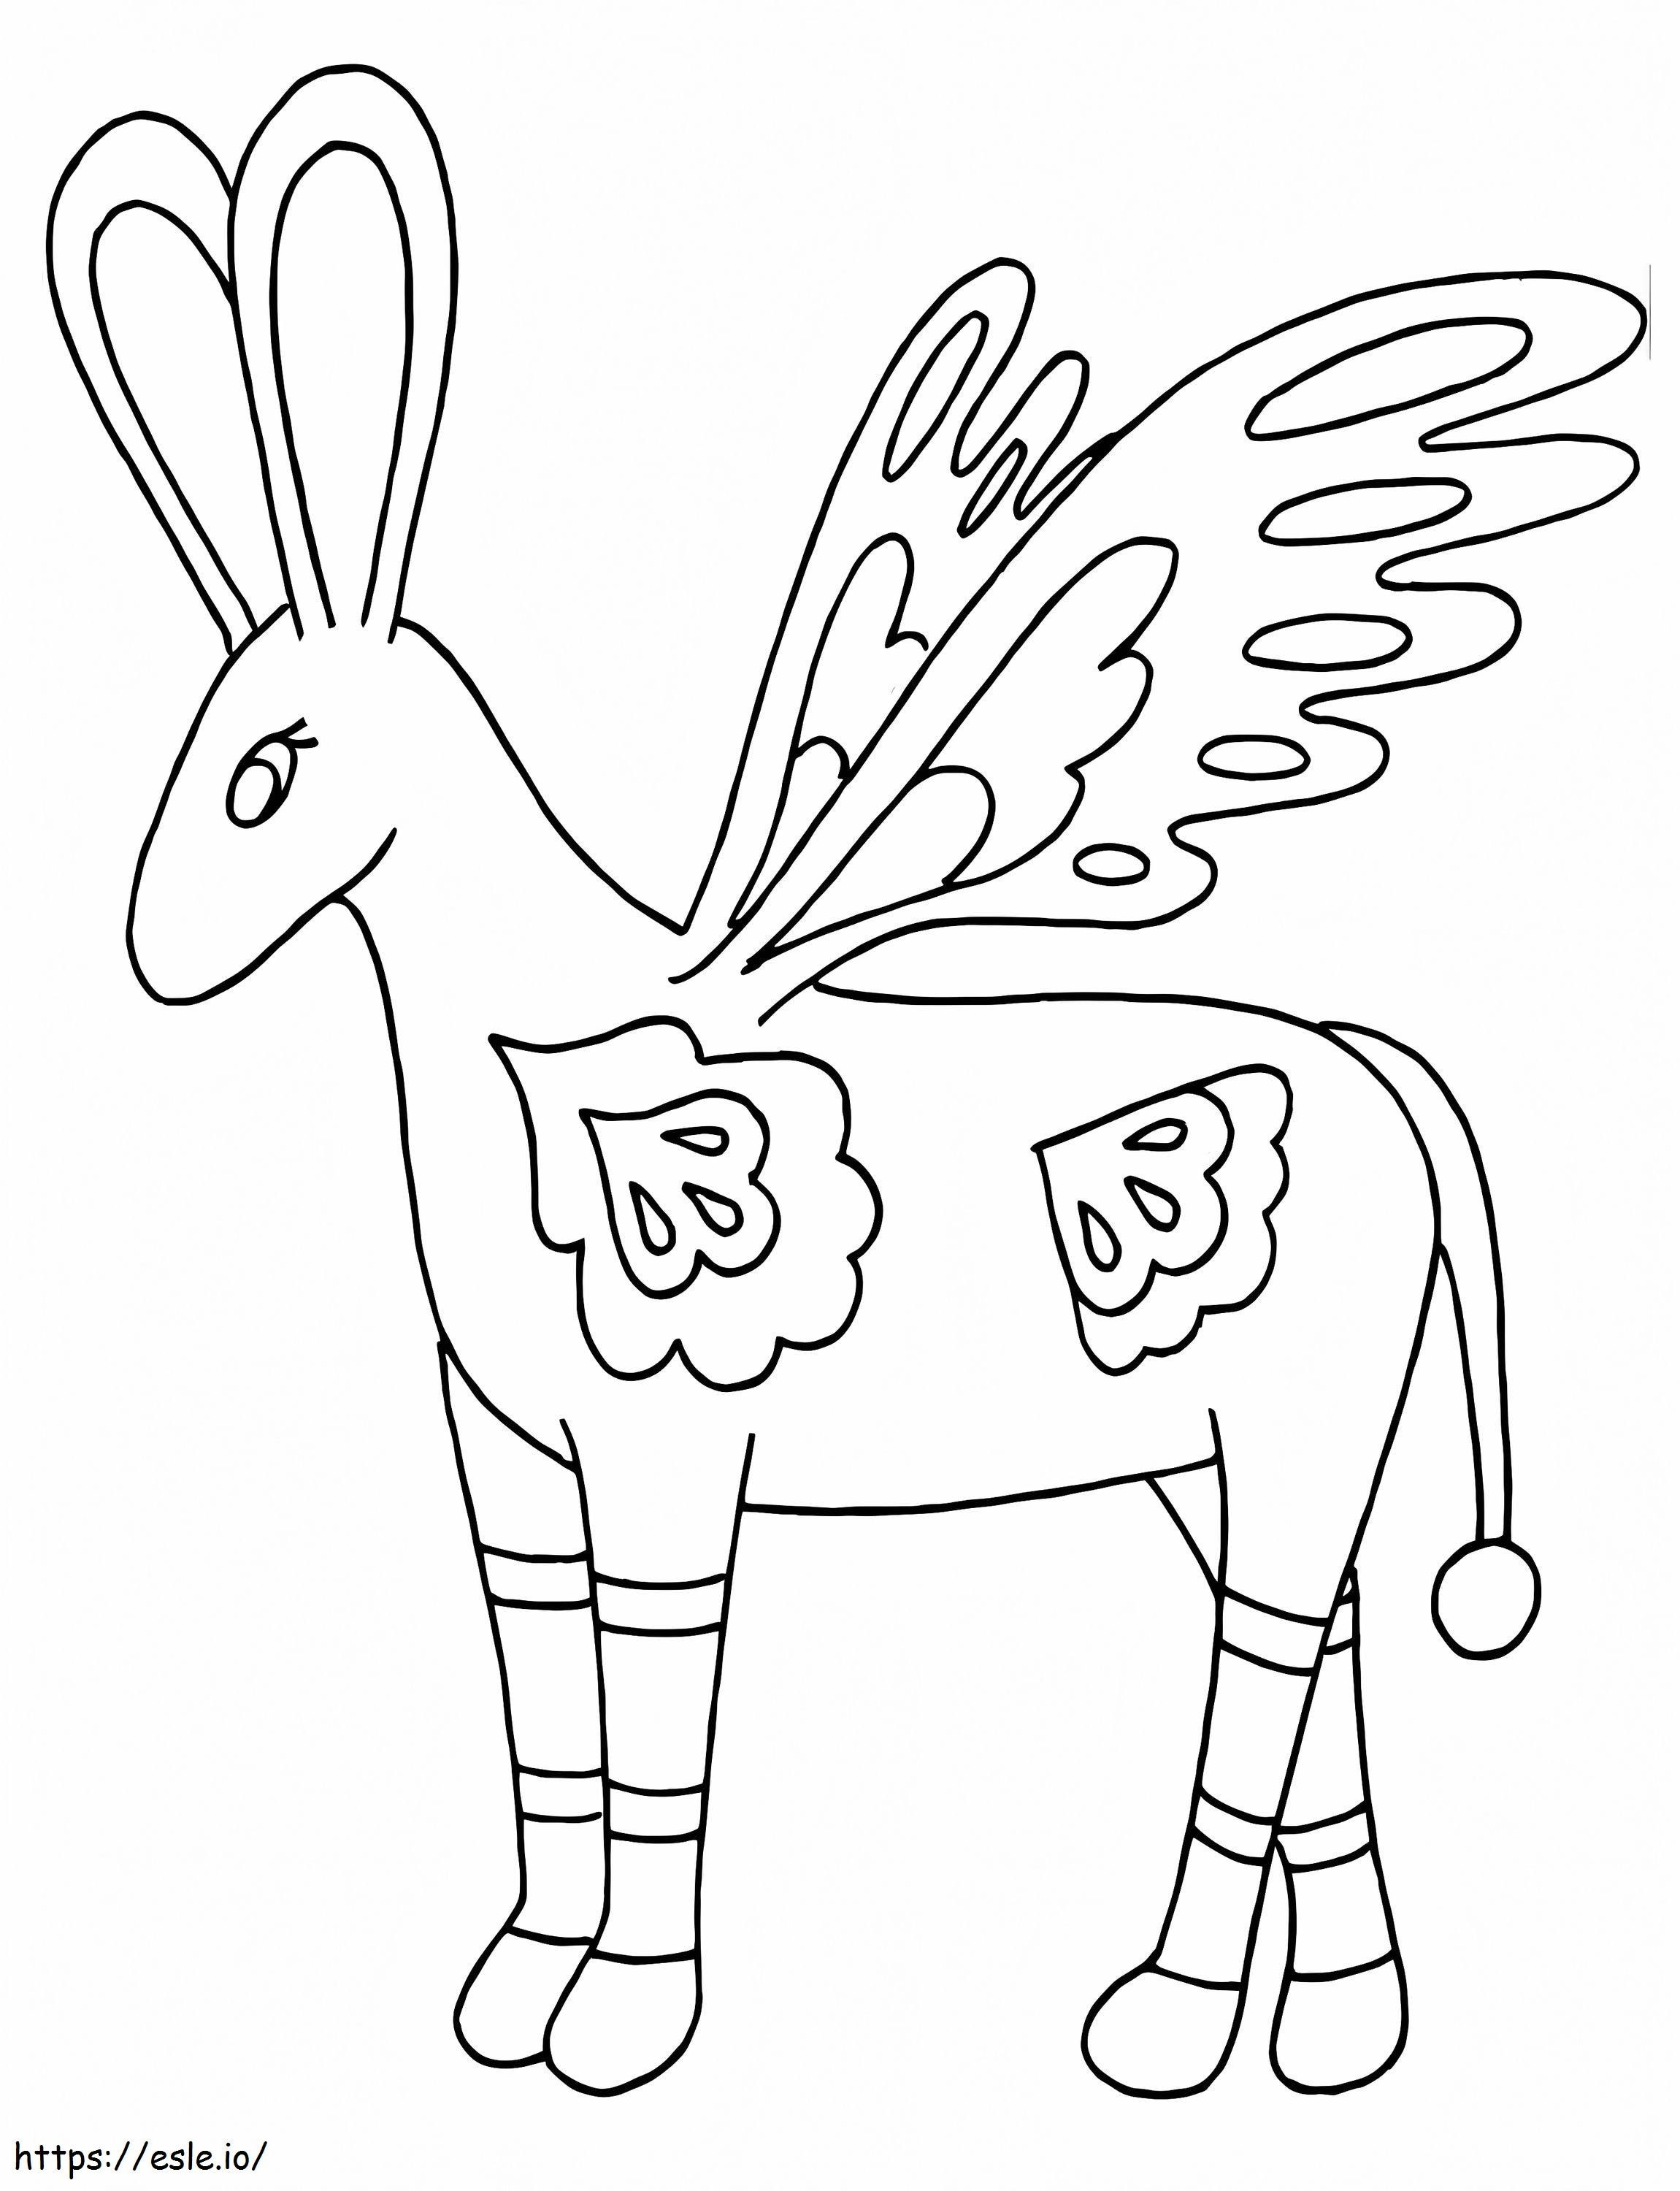 Winged Donkey Alebrije coloring page